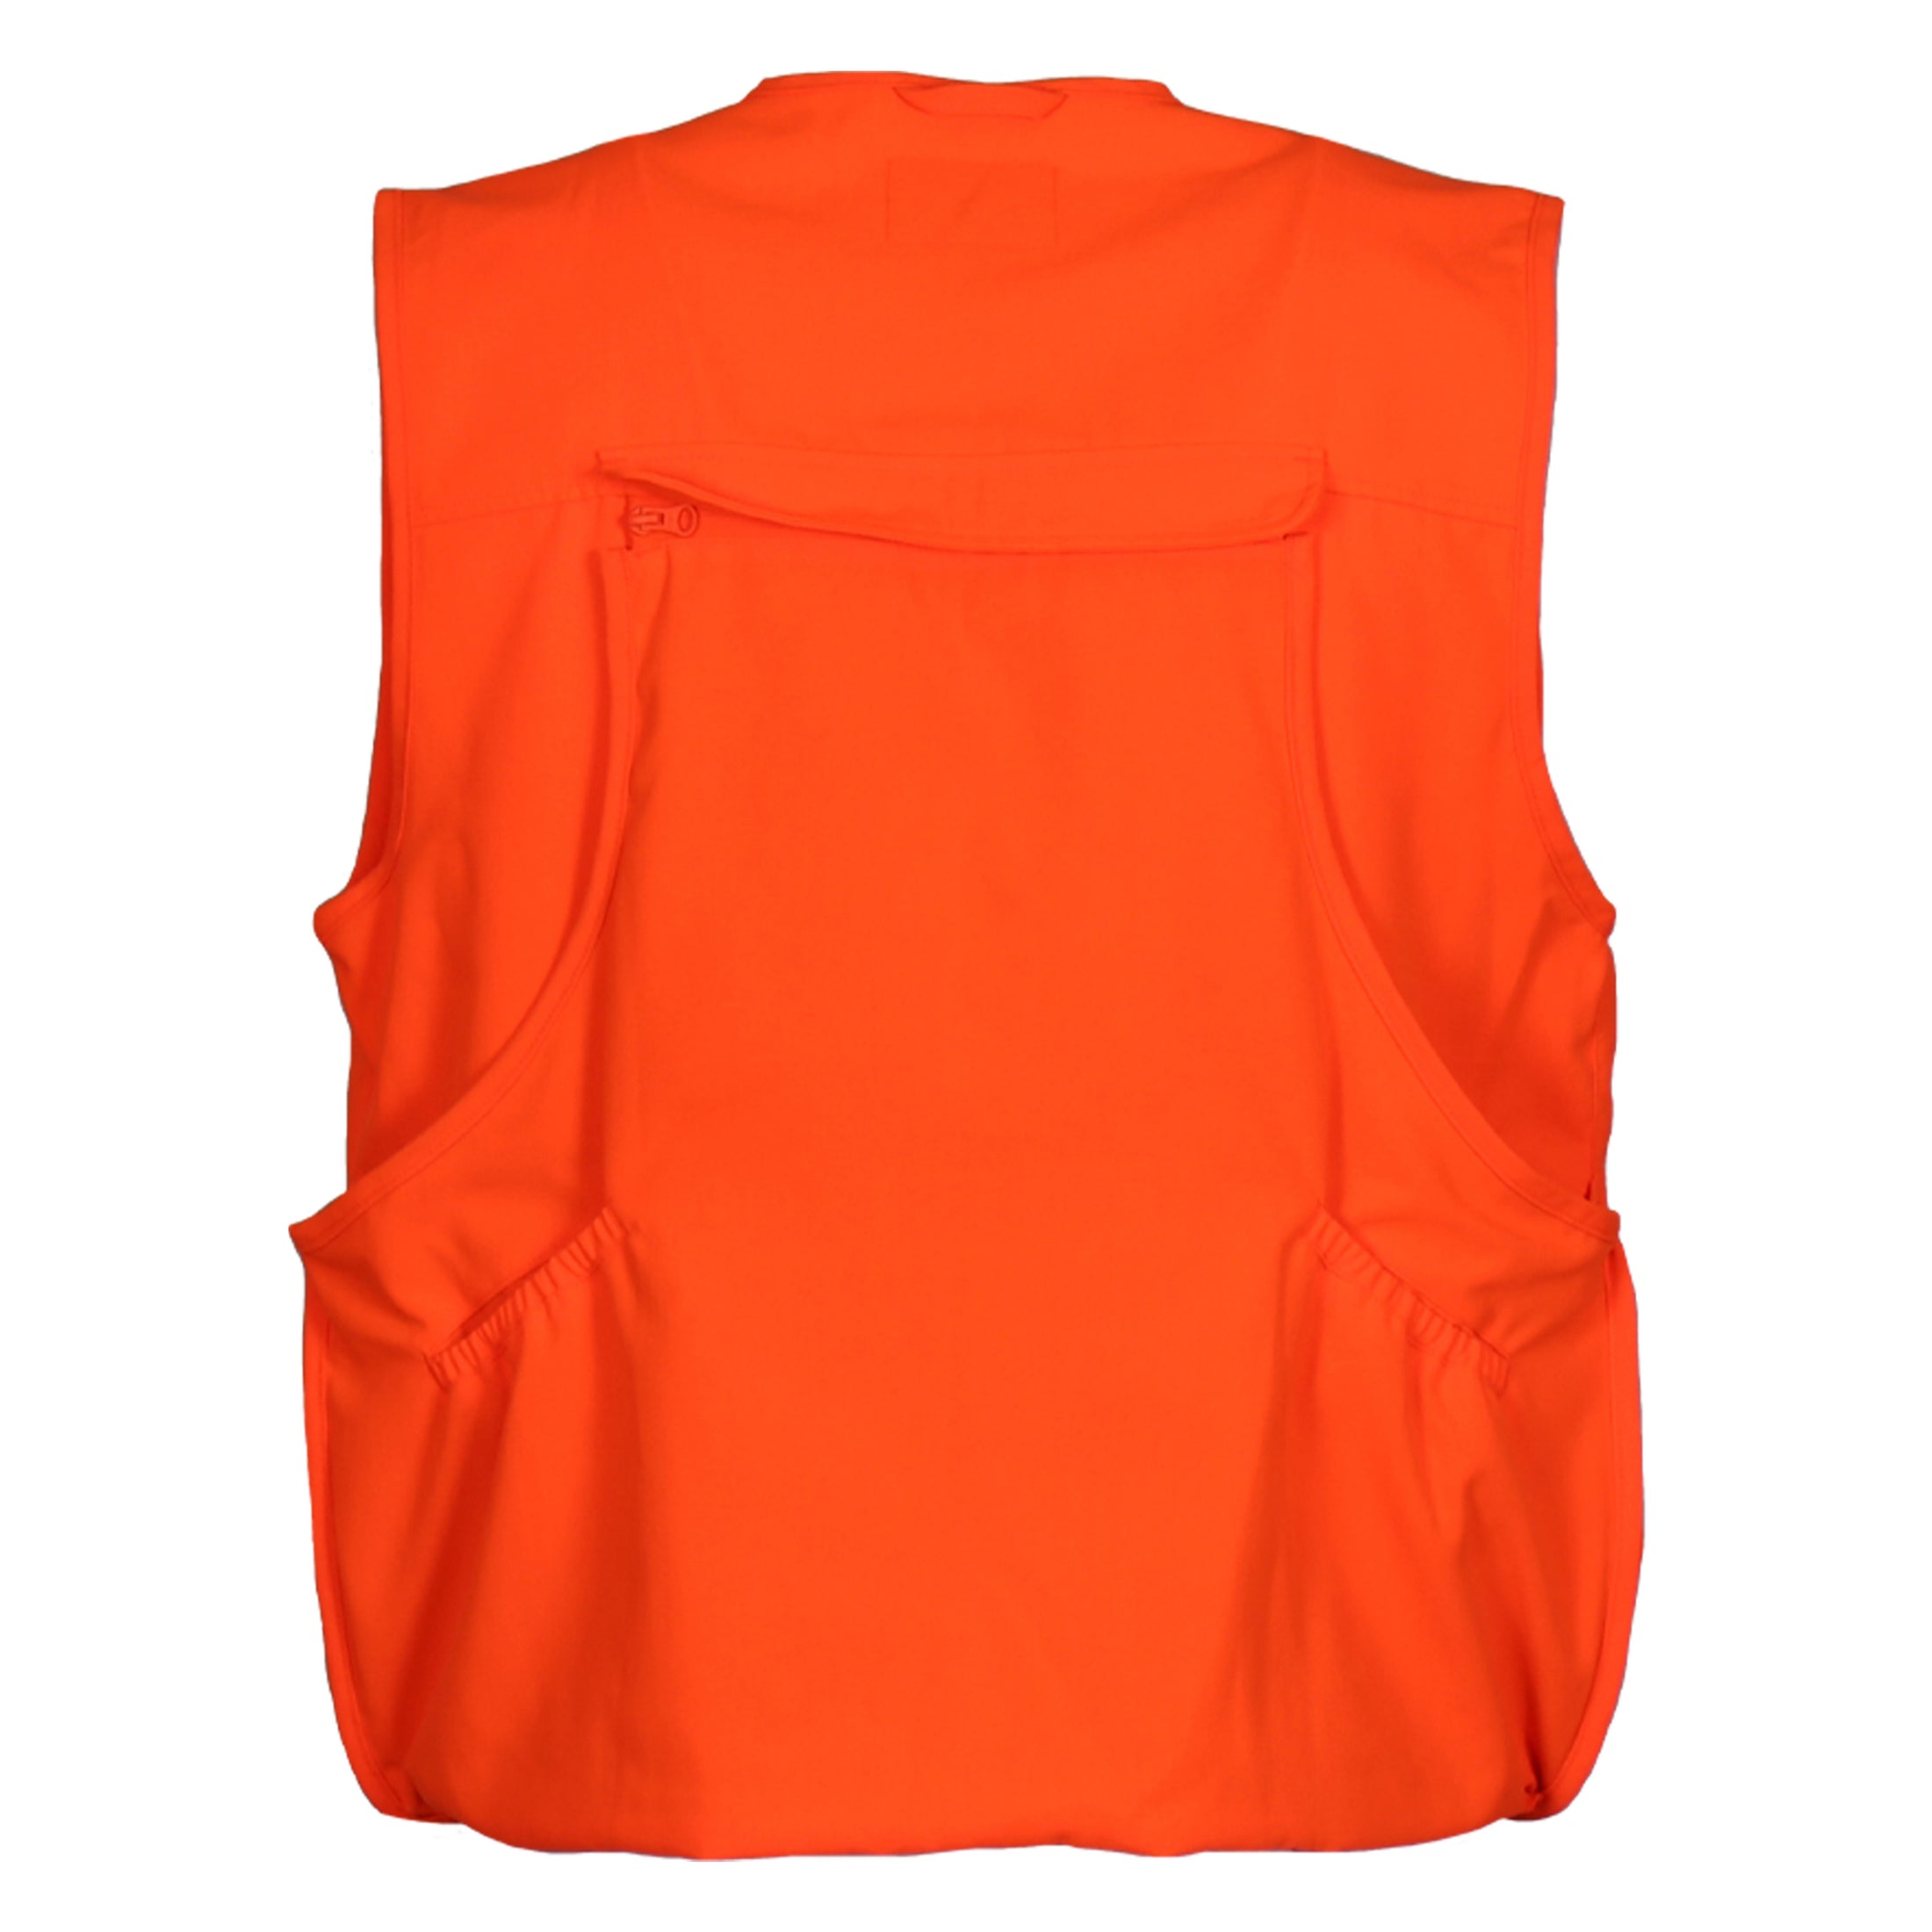 gamehide Chukar Upland Vest back (blaze orange)